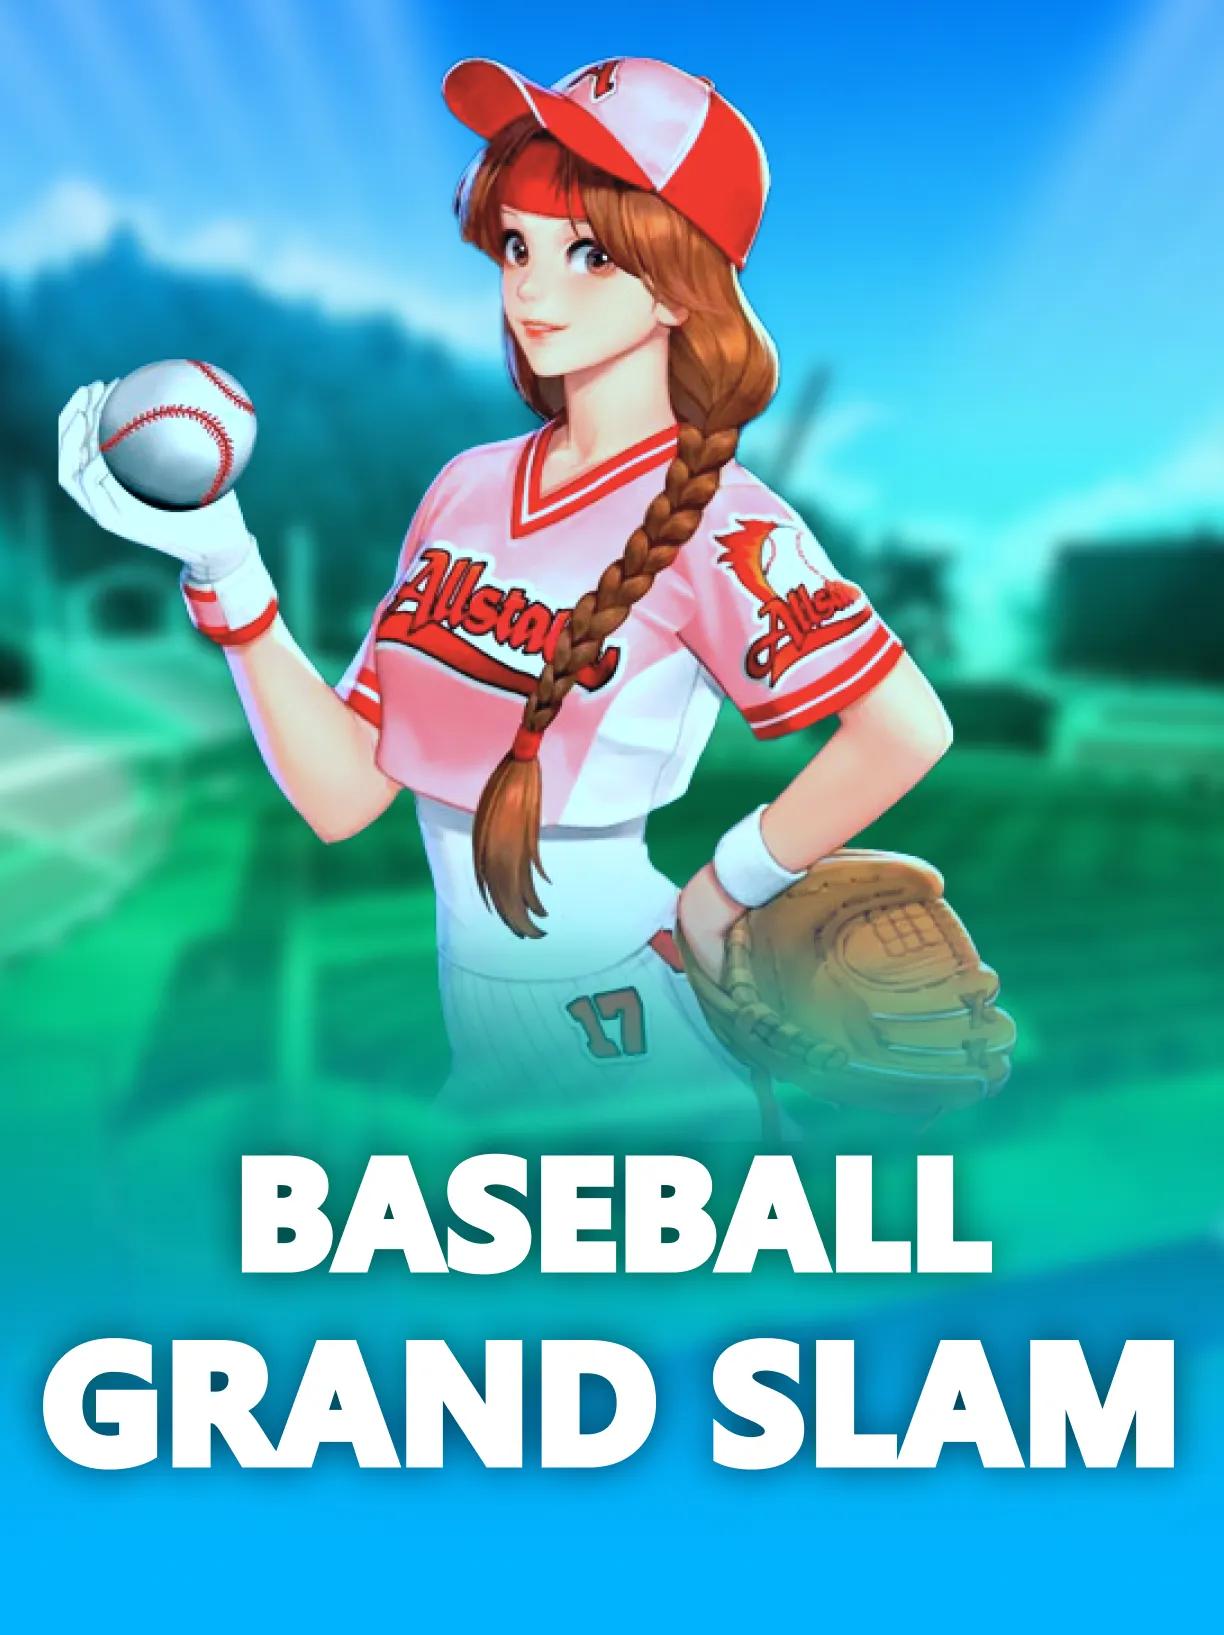 ug_Baseball_Grand_Slam_square.webp